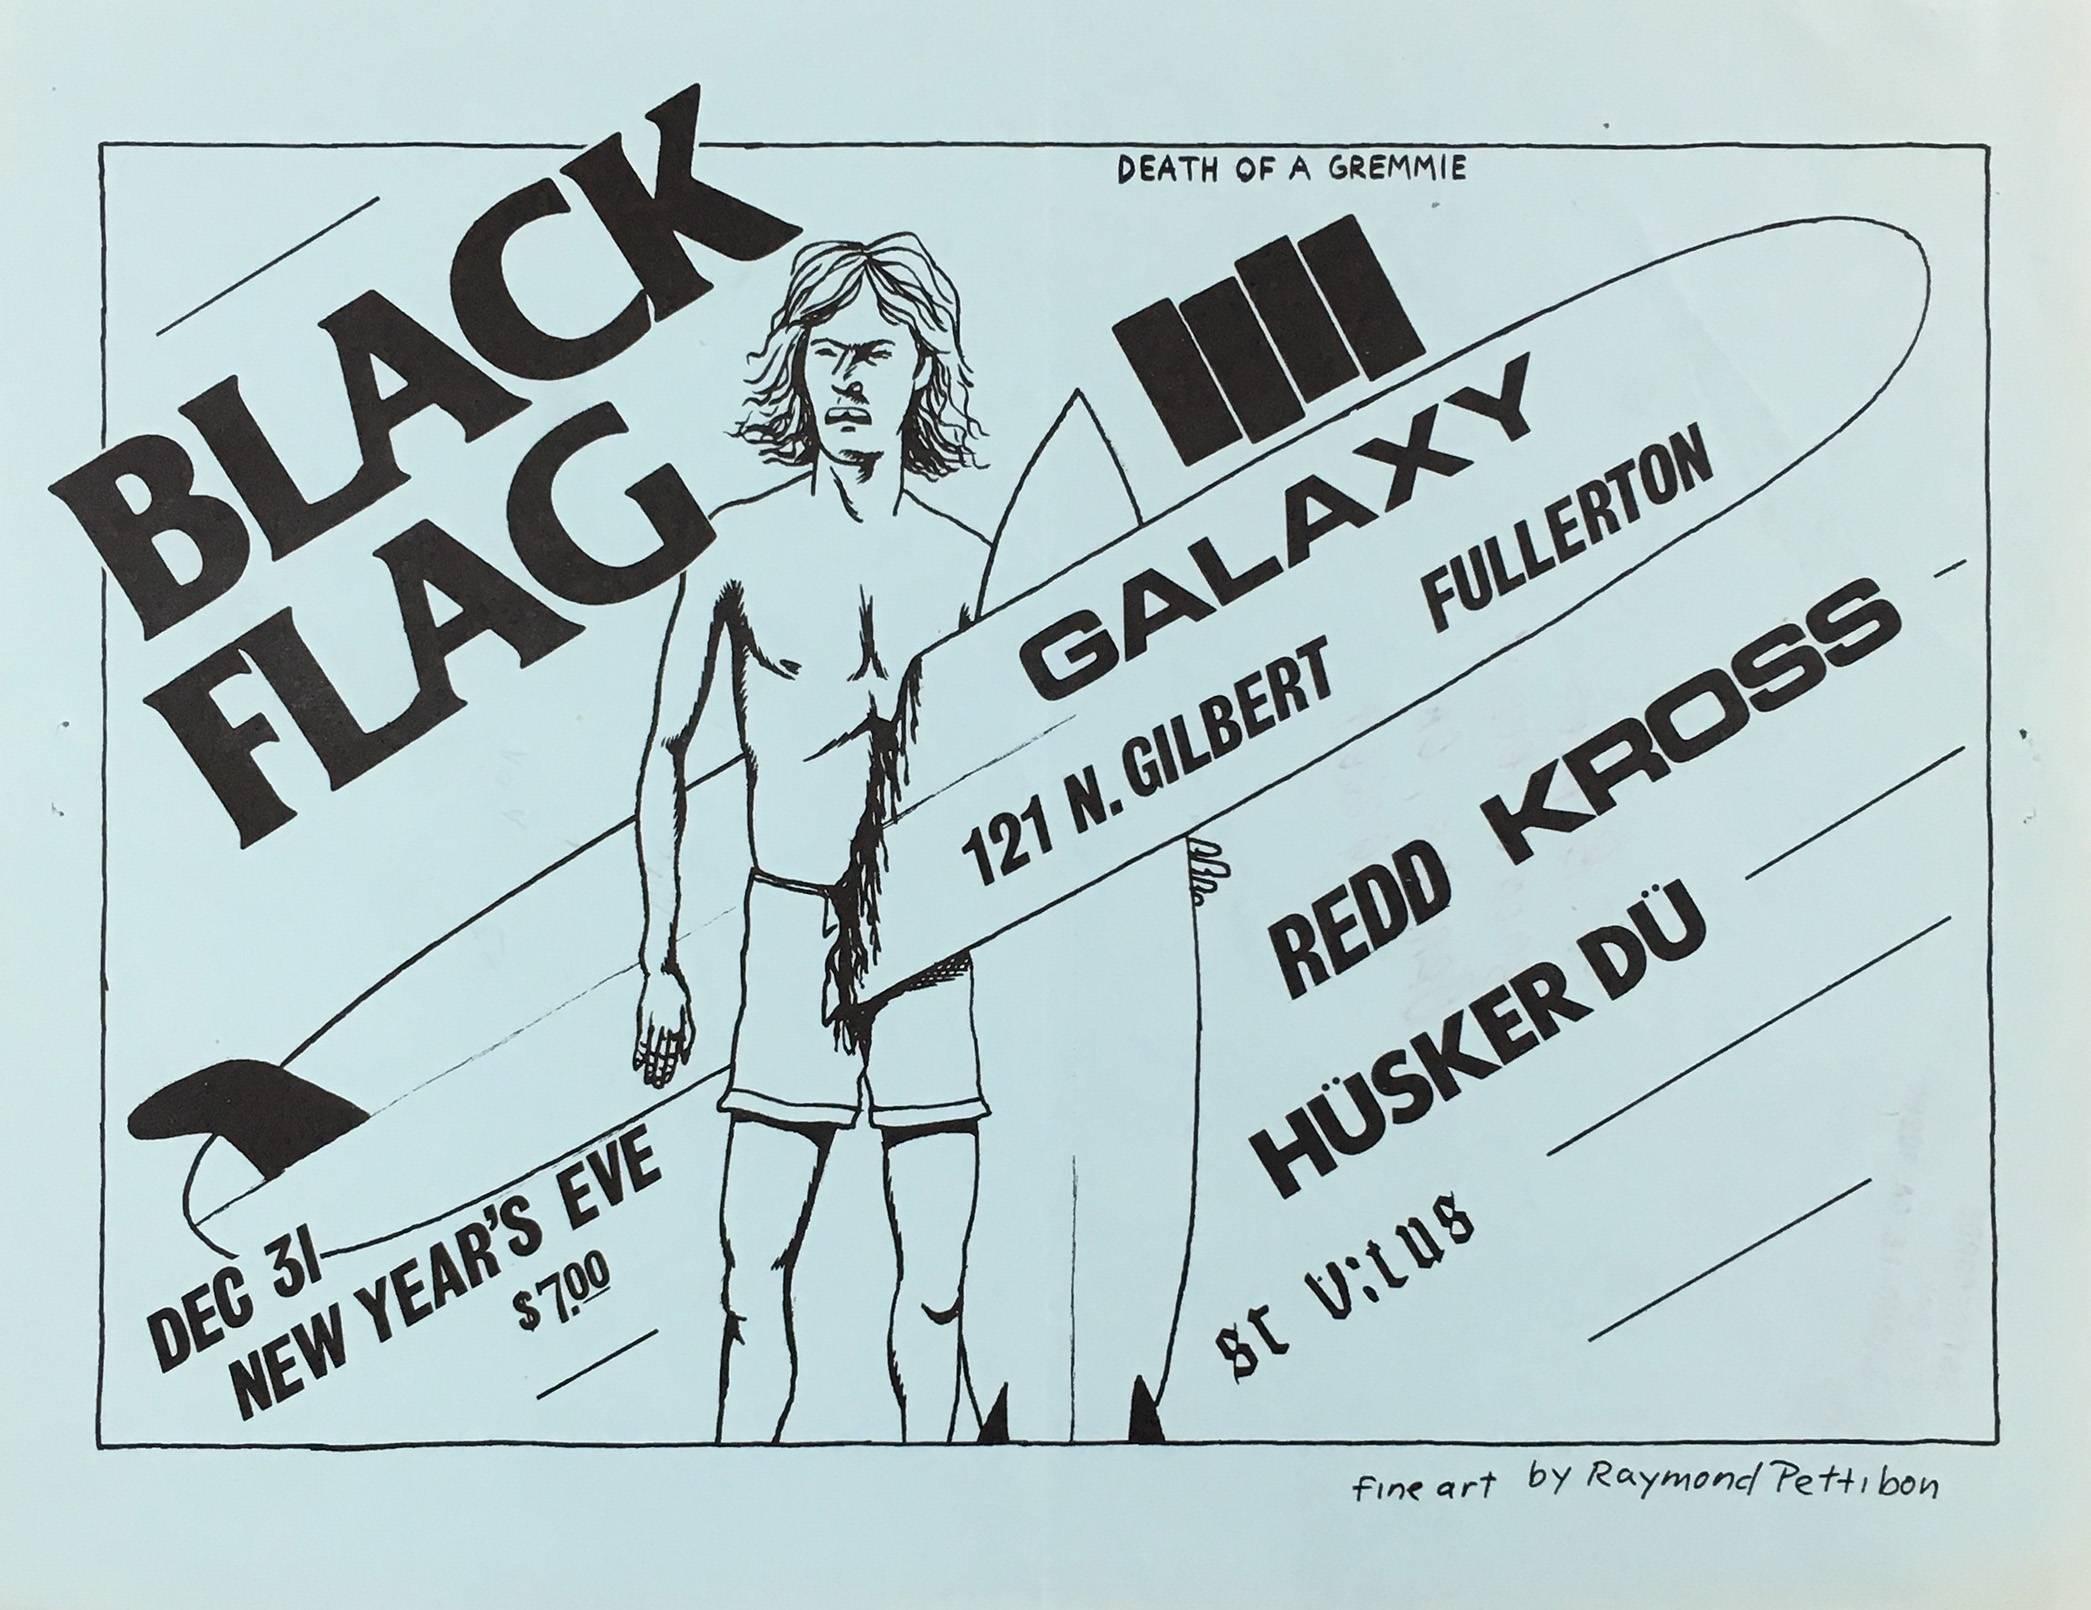 Rare Original Raymond Pettibon Black Flag Flyer, 1982
Early Punk Flyer / handbill featuring printed artwork by Raymond Pettibon. Black Flag at Galaxy, Dec 31, 1982. Original off-set print, plate signed by Pettibon on the lower right. This an